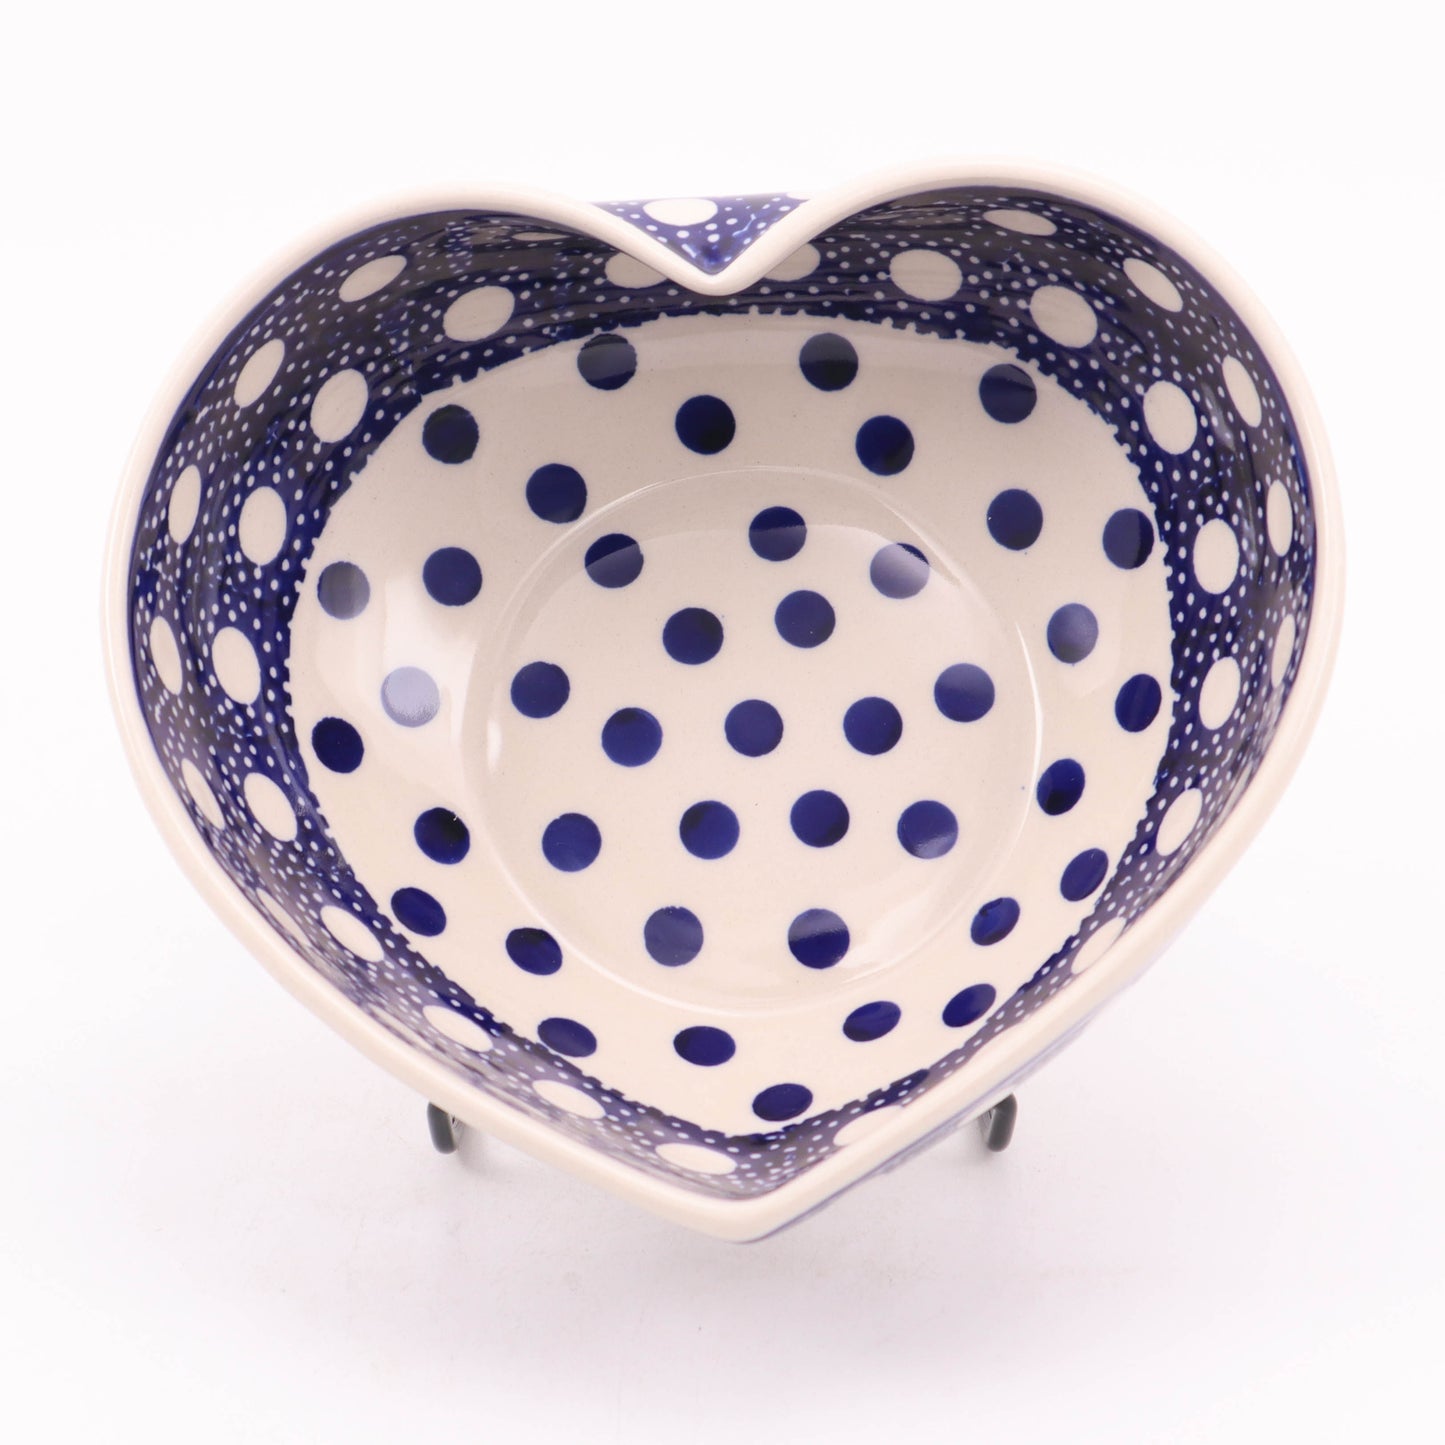 7"x6.5" Heart Bowl. Pattern: By Design